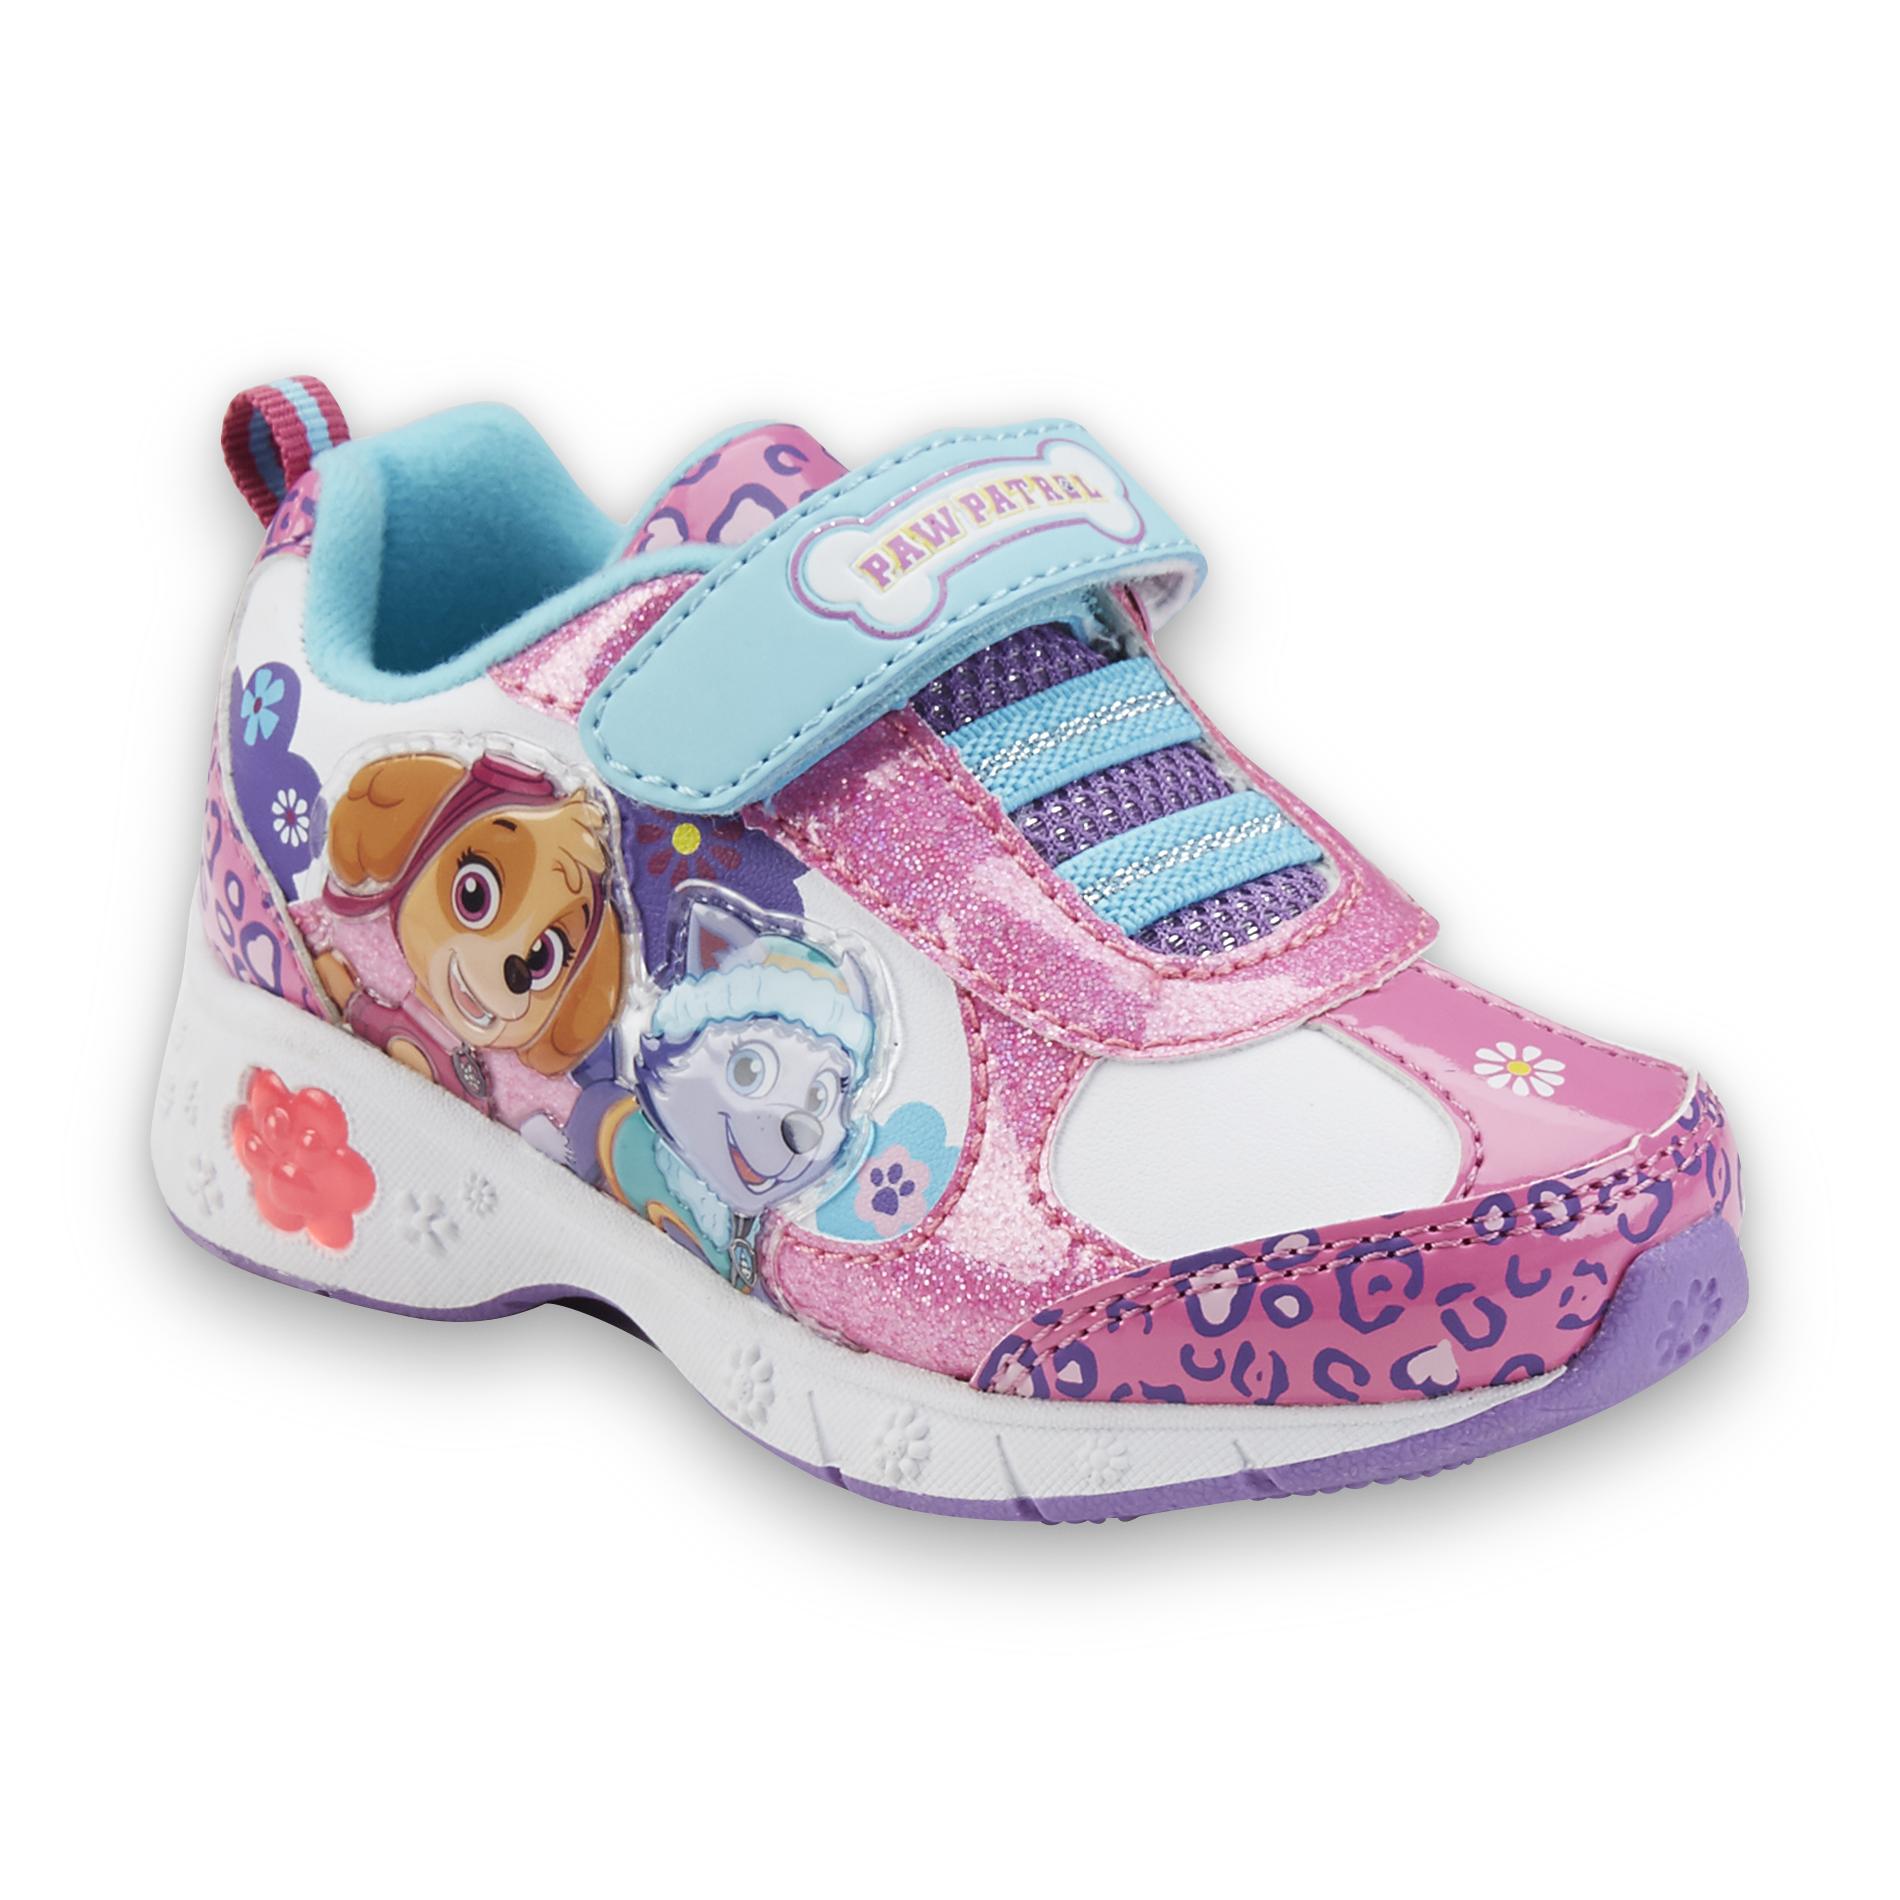 Nickelodeon Toddler Girl's PAW Patrol LightUp Shoes Kmart